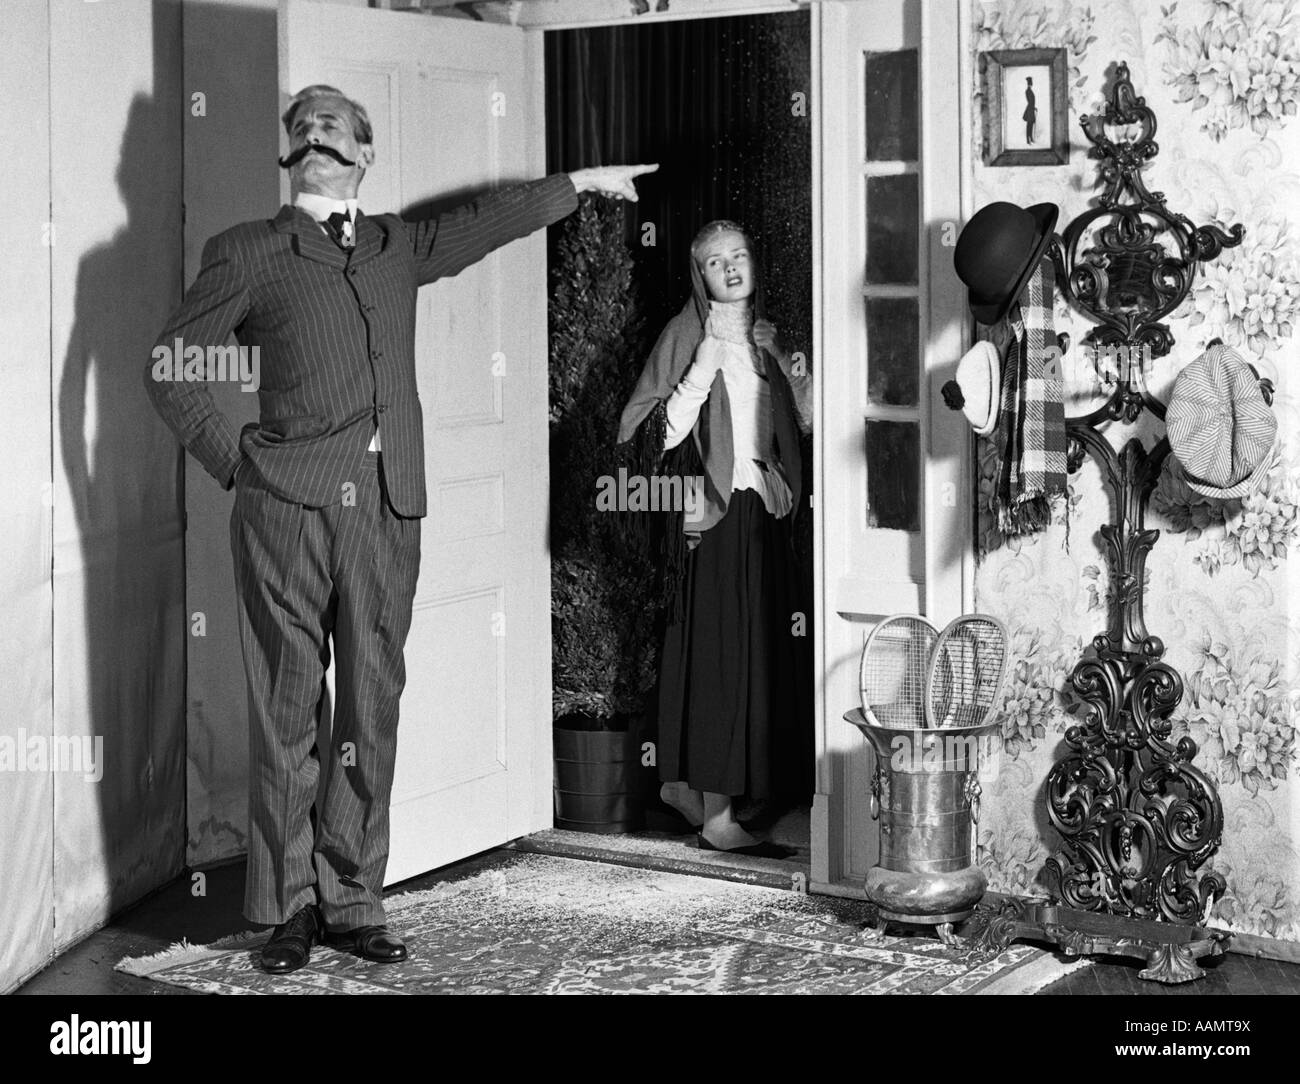 1960s SET-UP OF VICTORIAN MAN WITH HANDLEBAR MUSTACHE BANISHING WOMAN IN DOORWAY Stock Photo